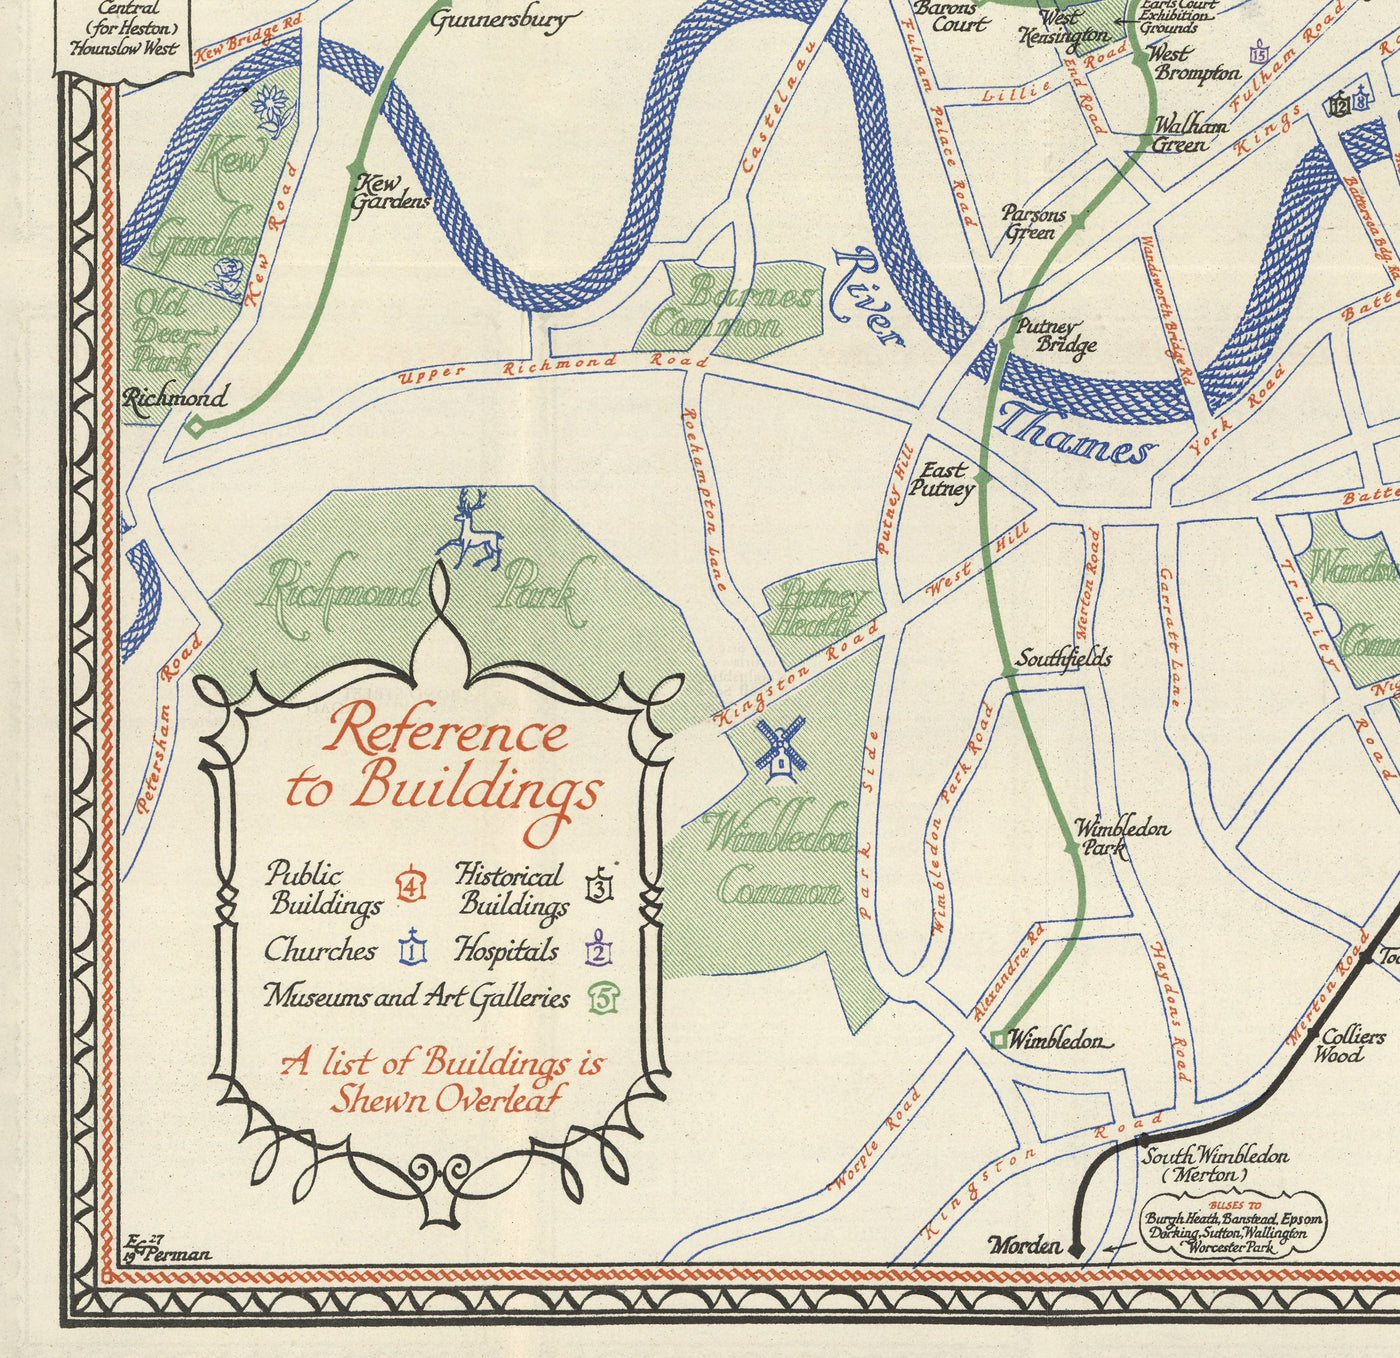 Mapa de tubos subterráneos Rare Old London, 1928 - Covent Garden, Piccadilly Circus, Central & District Line